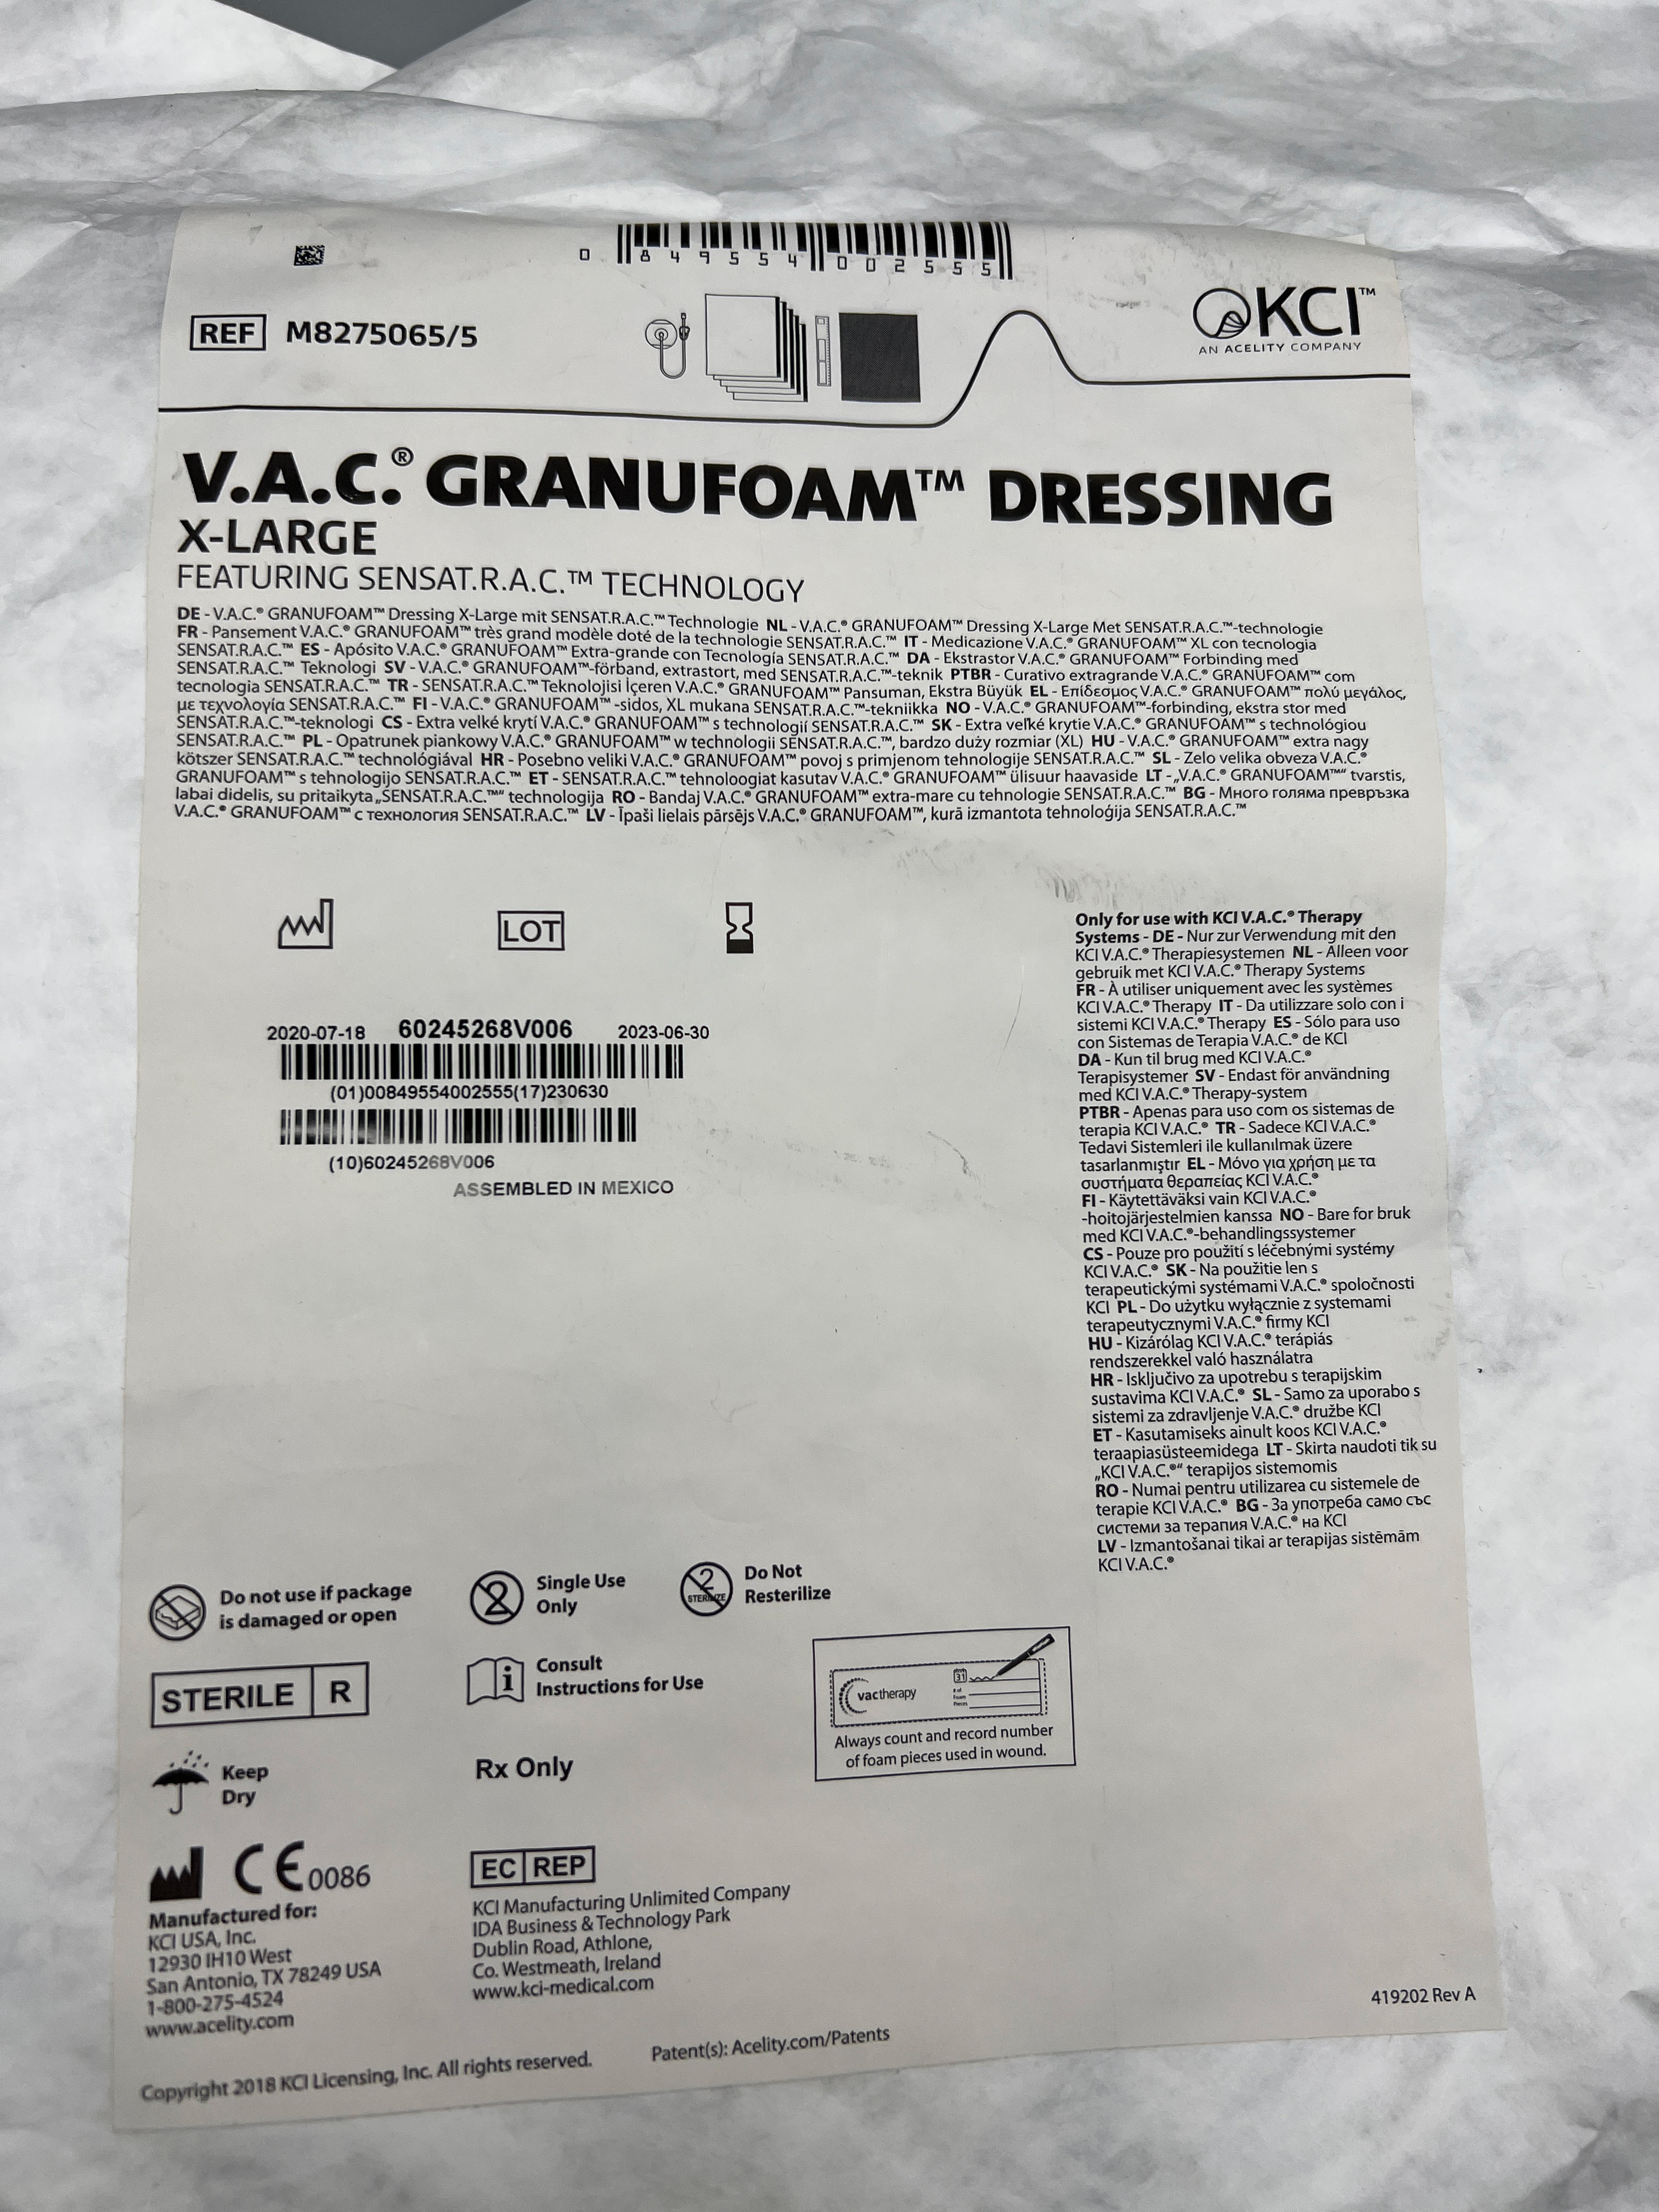 V.A.C. GRANUFOAM DRESSING FEATURING SENSAT.R.A.C. TECHNOLOGY